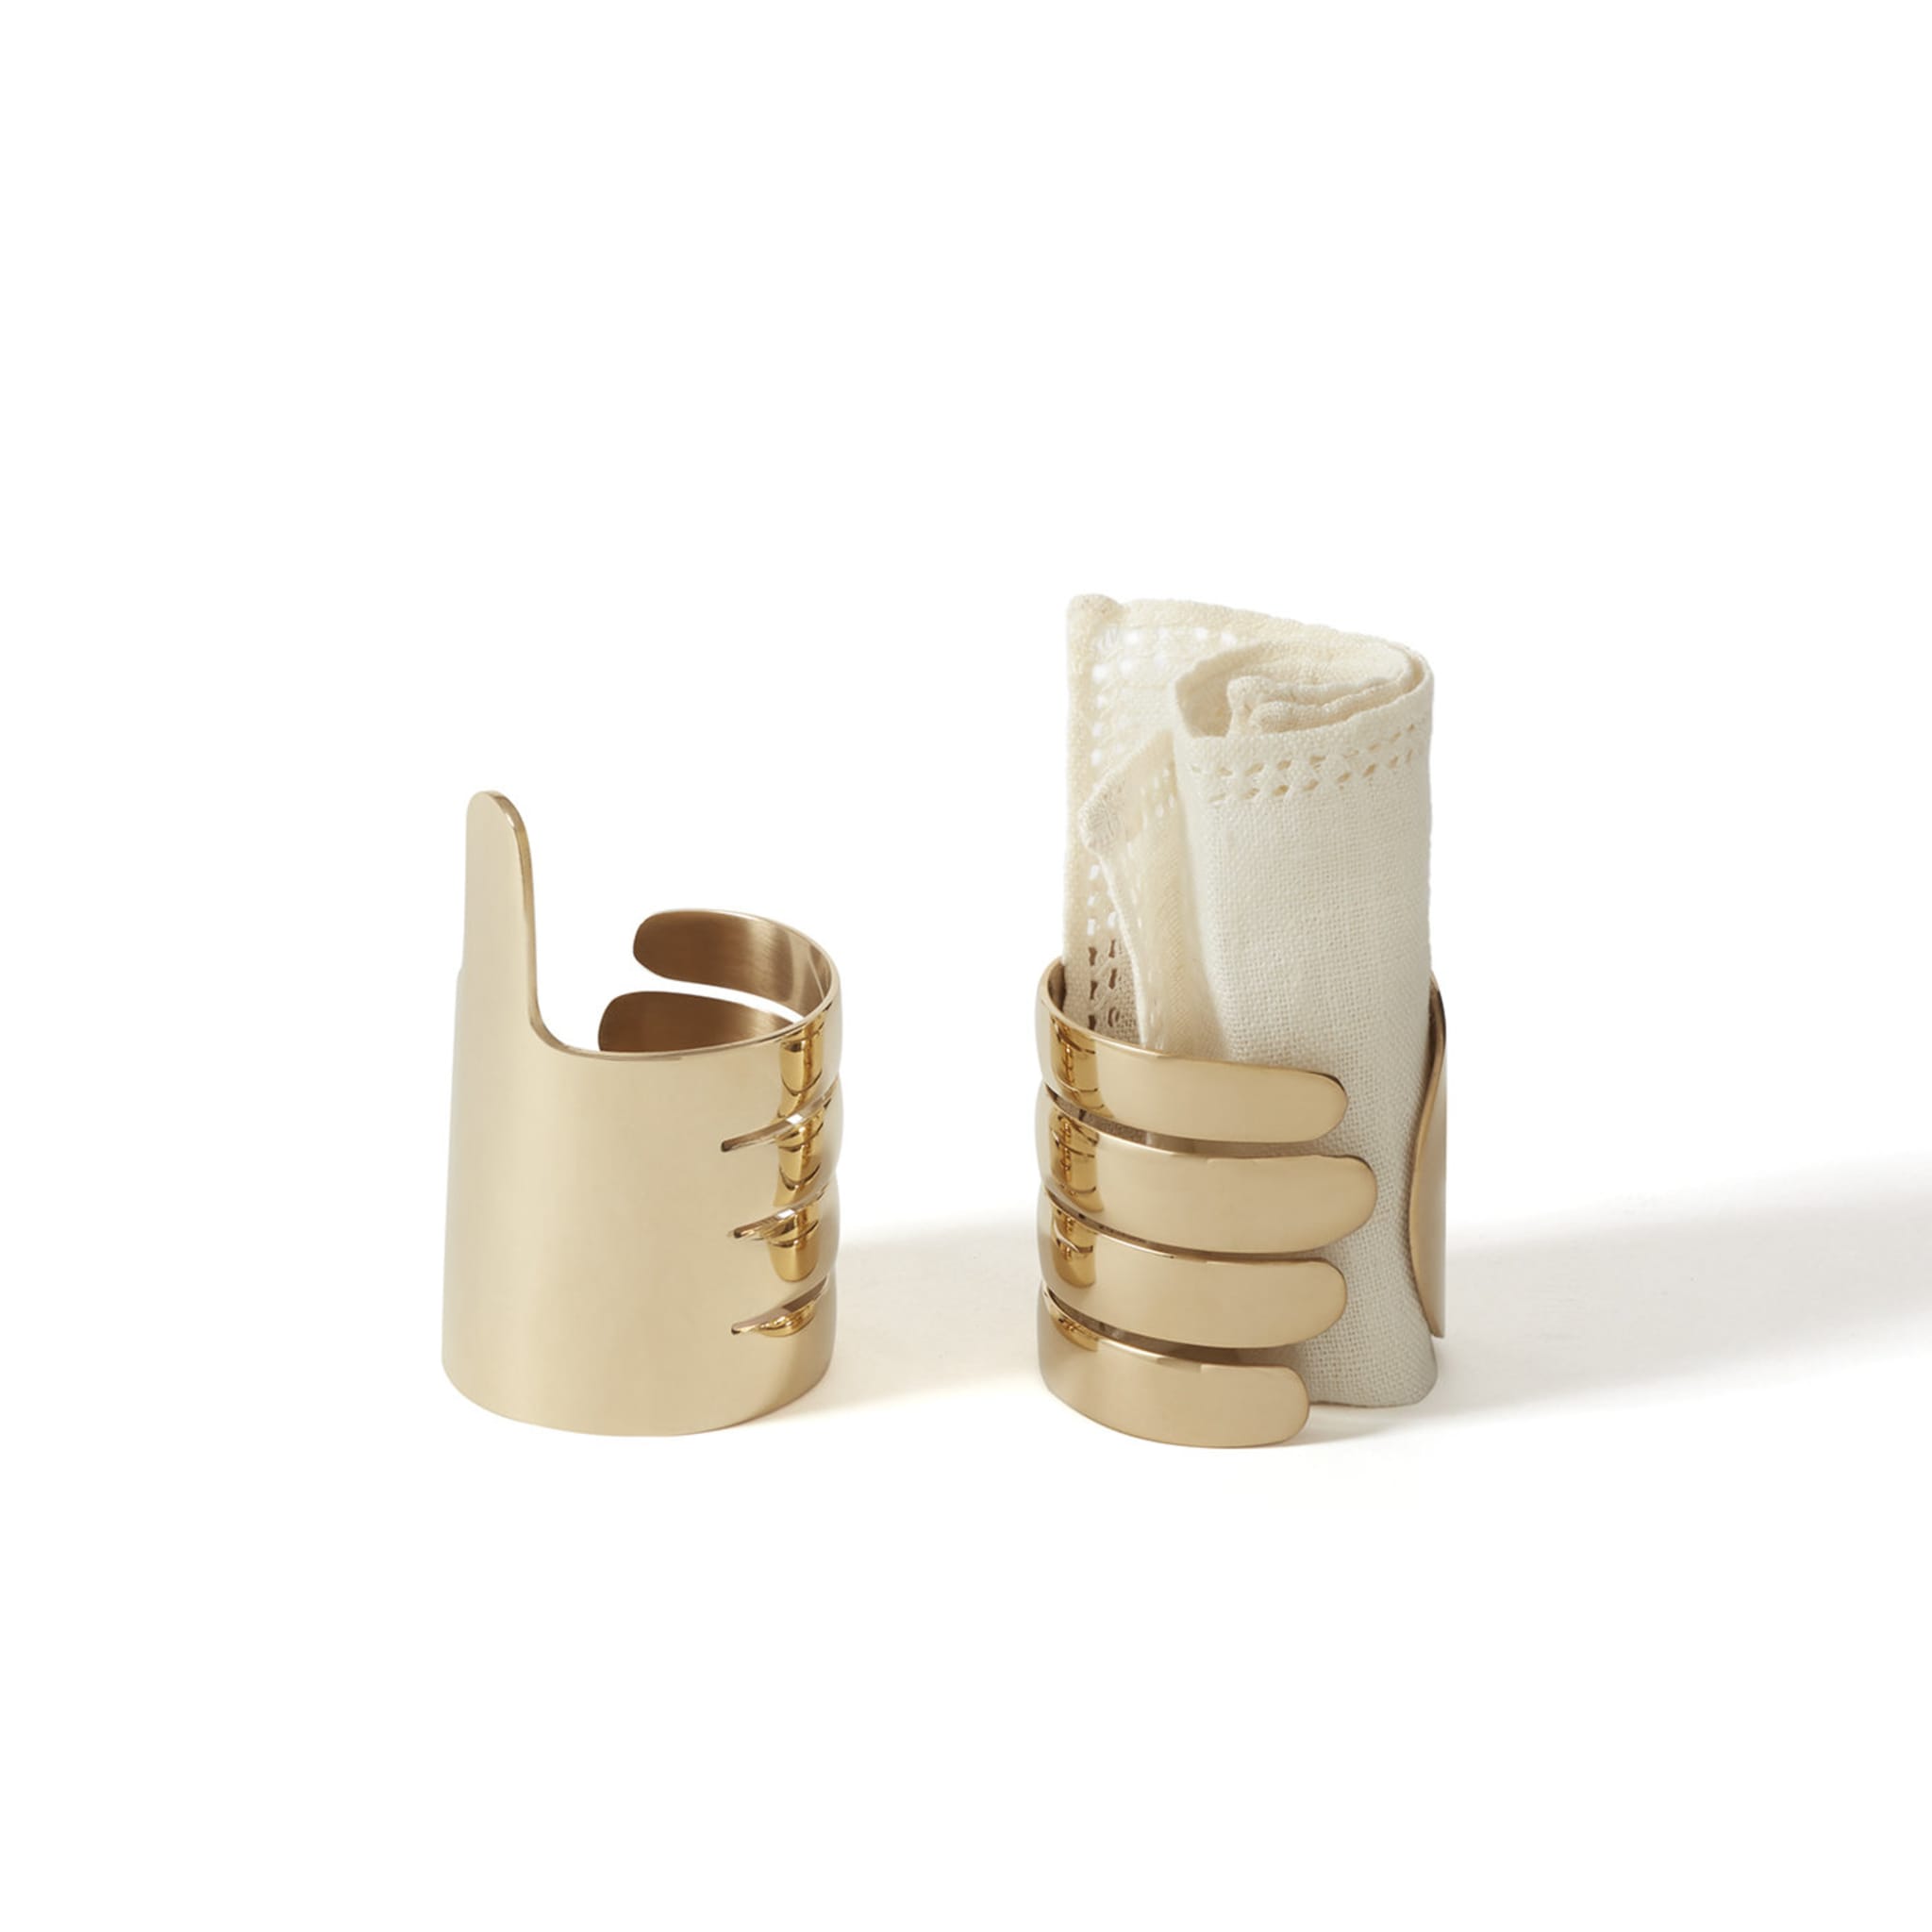 Set of 2 Brass Handi Napkin Rings by Jaime Hayon - Alternative view 1